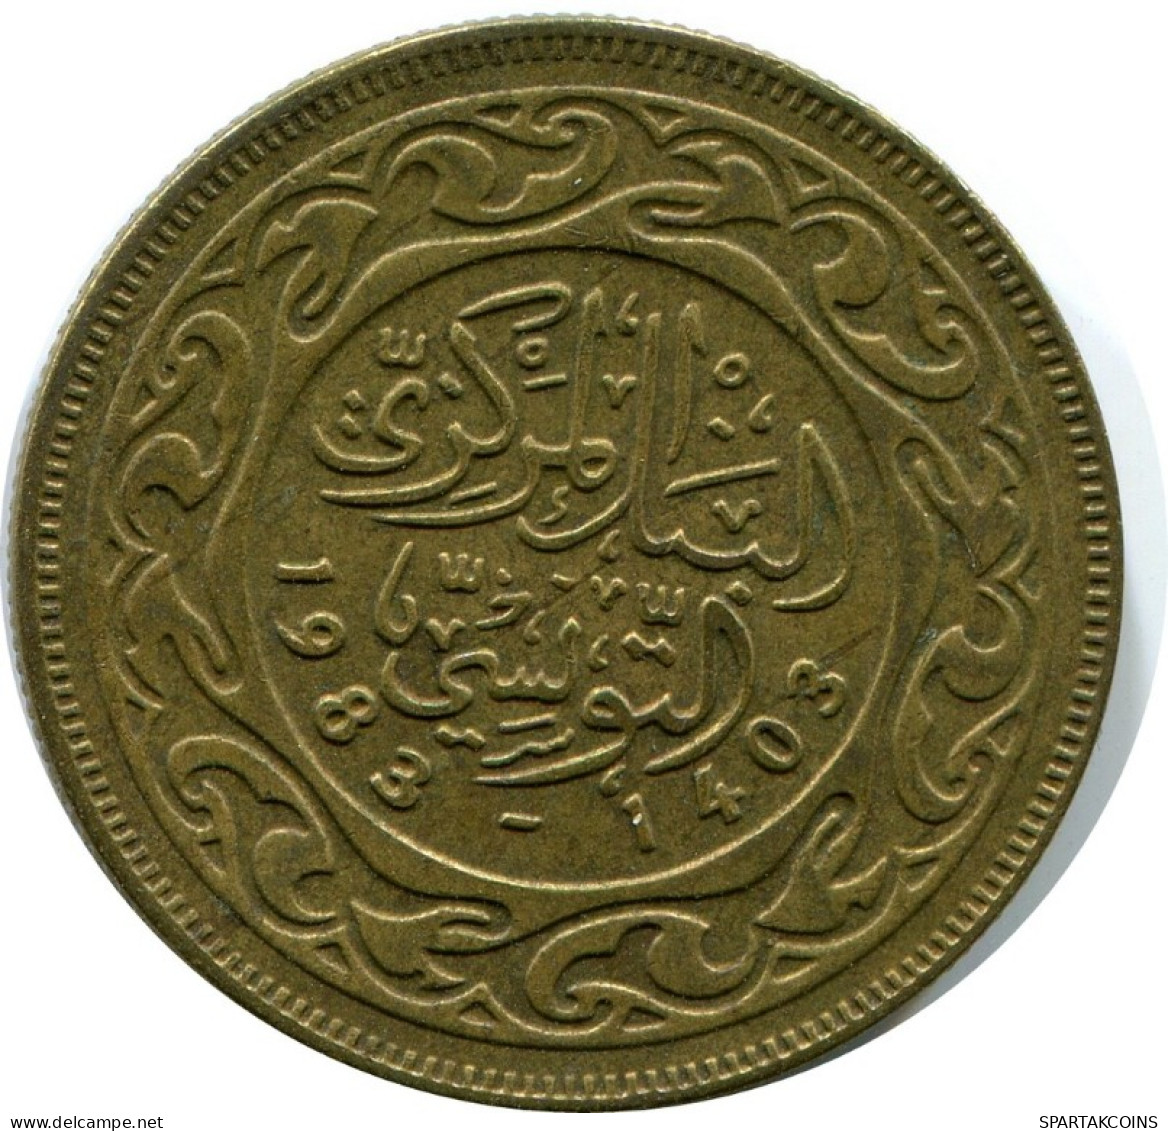 50 MILLIMES 1983 TUNISIA Islamic Coin #AH768.U.A - Tunisia